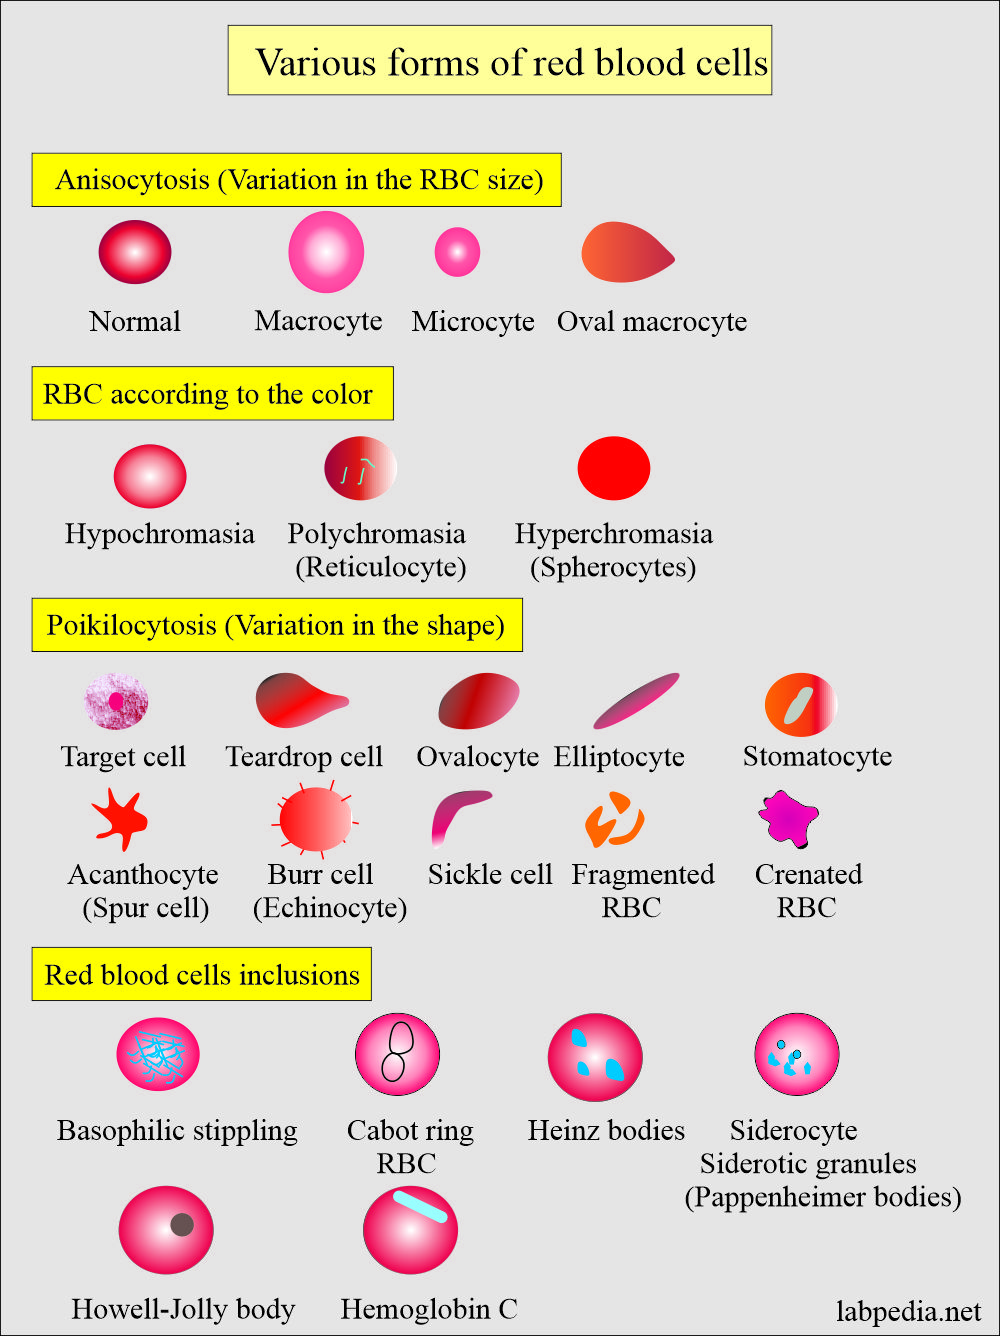 RBC morphological types